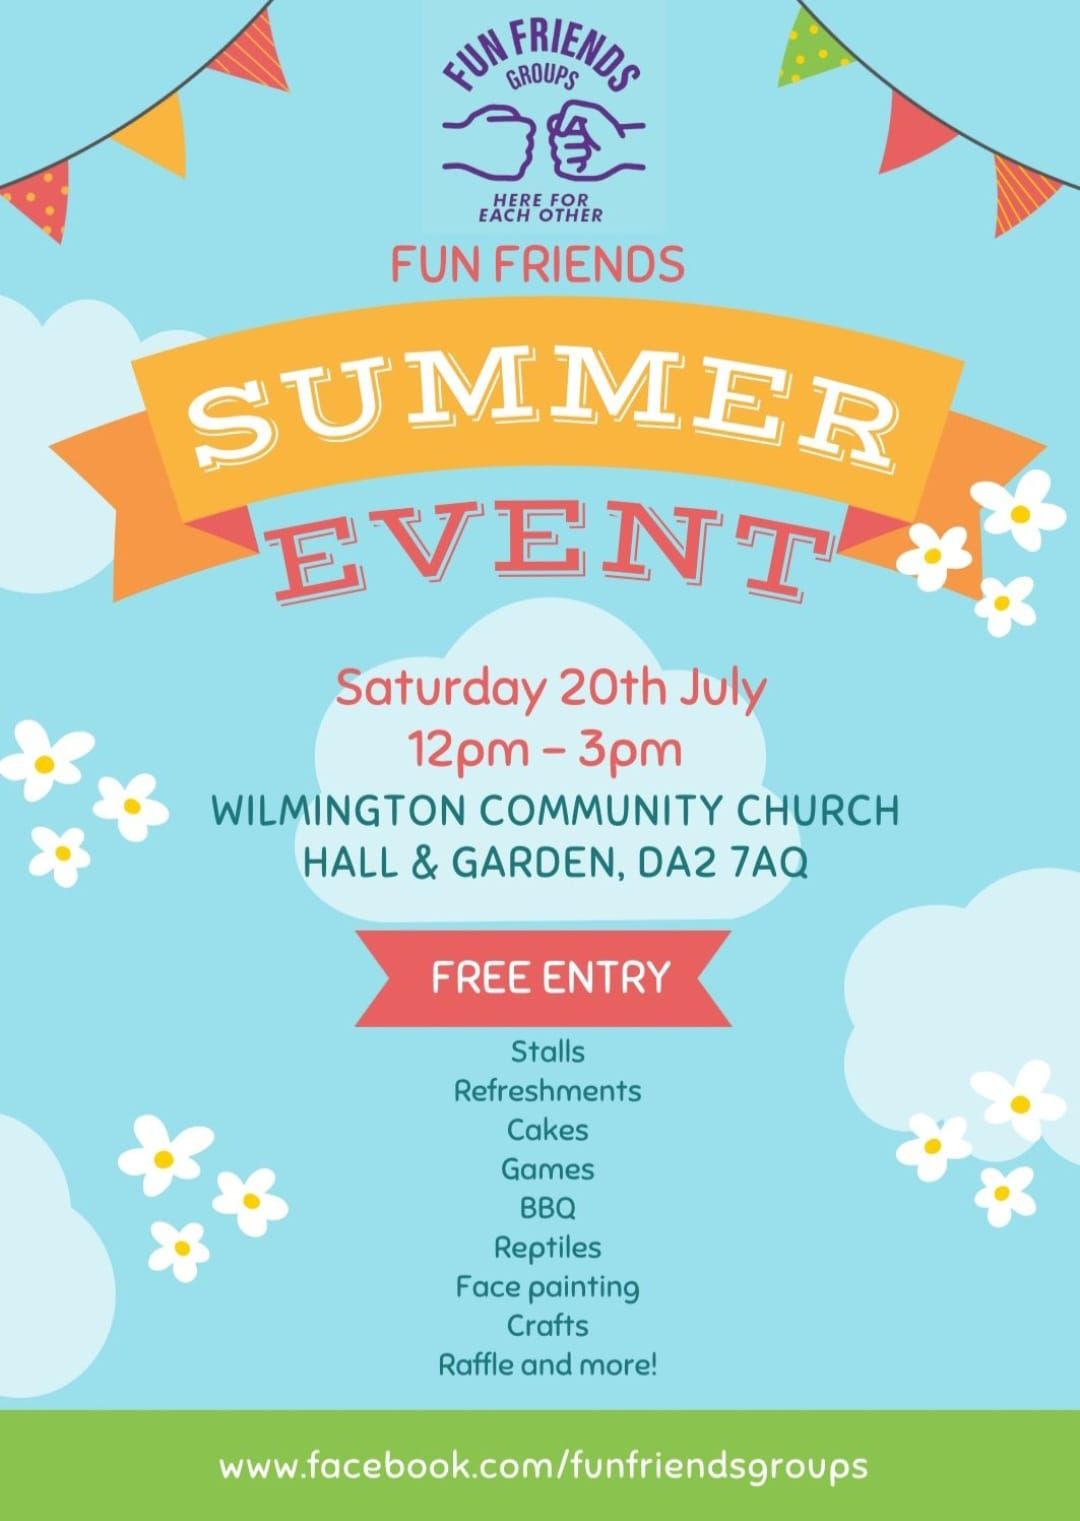 Fun Friends Summer Family Event Wilmington, Dartford